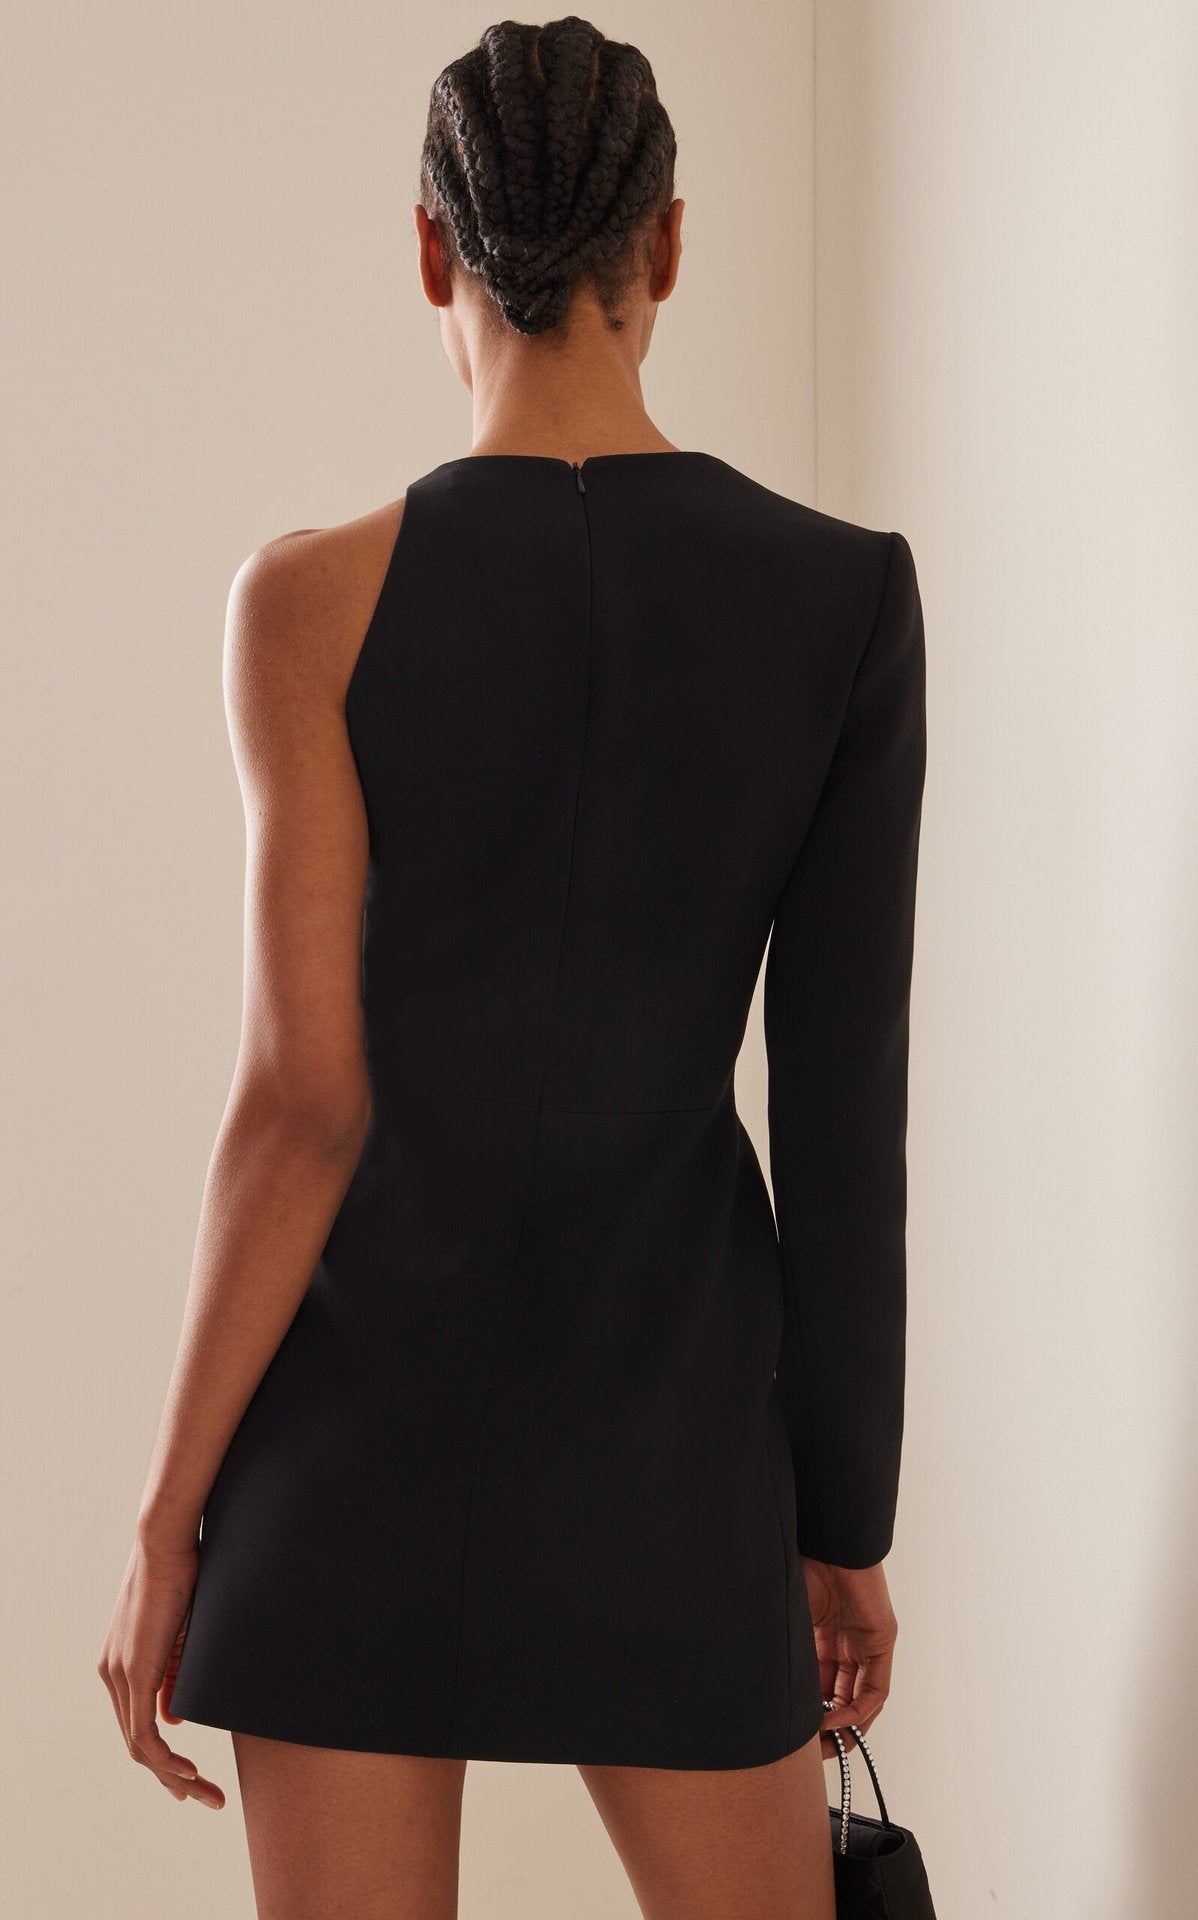 Wave See-through One Shoulder Dress Fashion Design Short Evening Dress aclosy